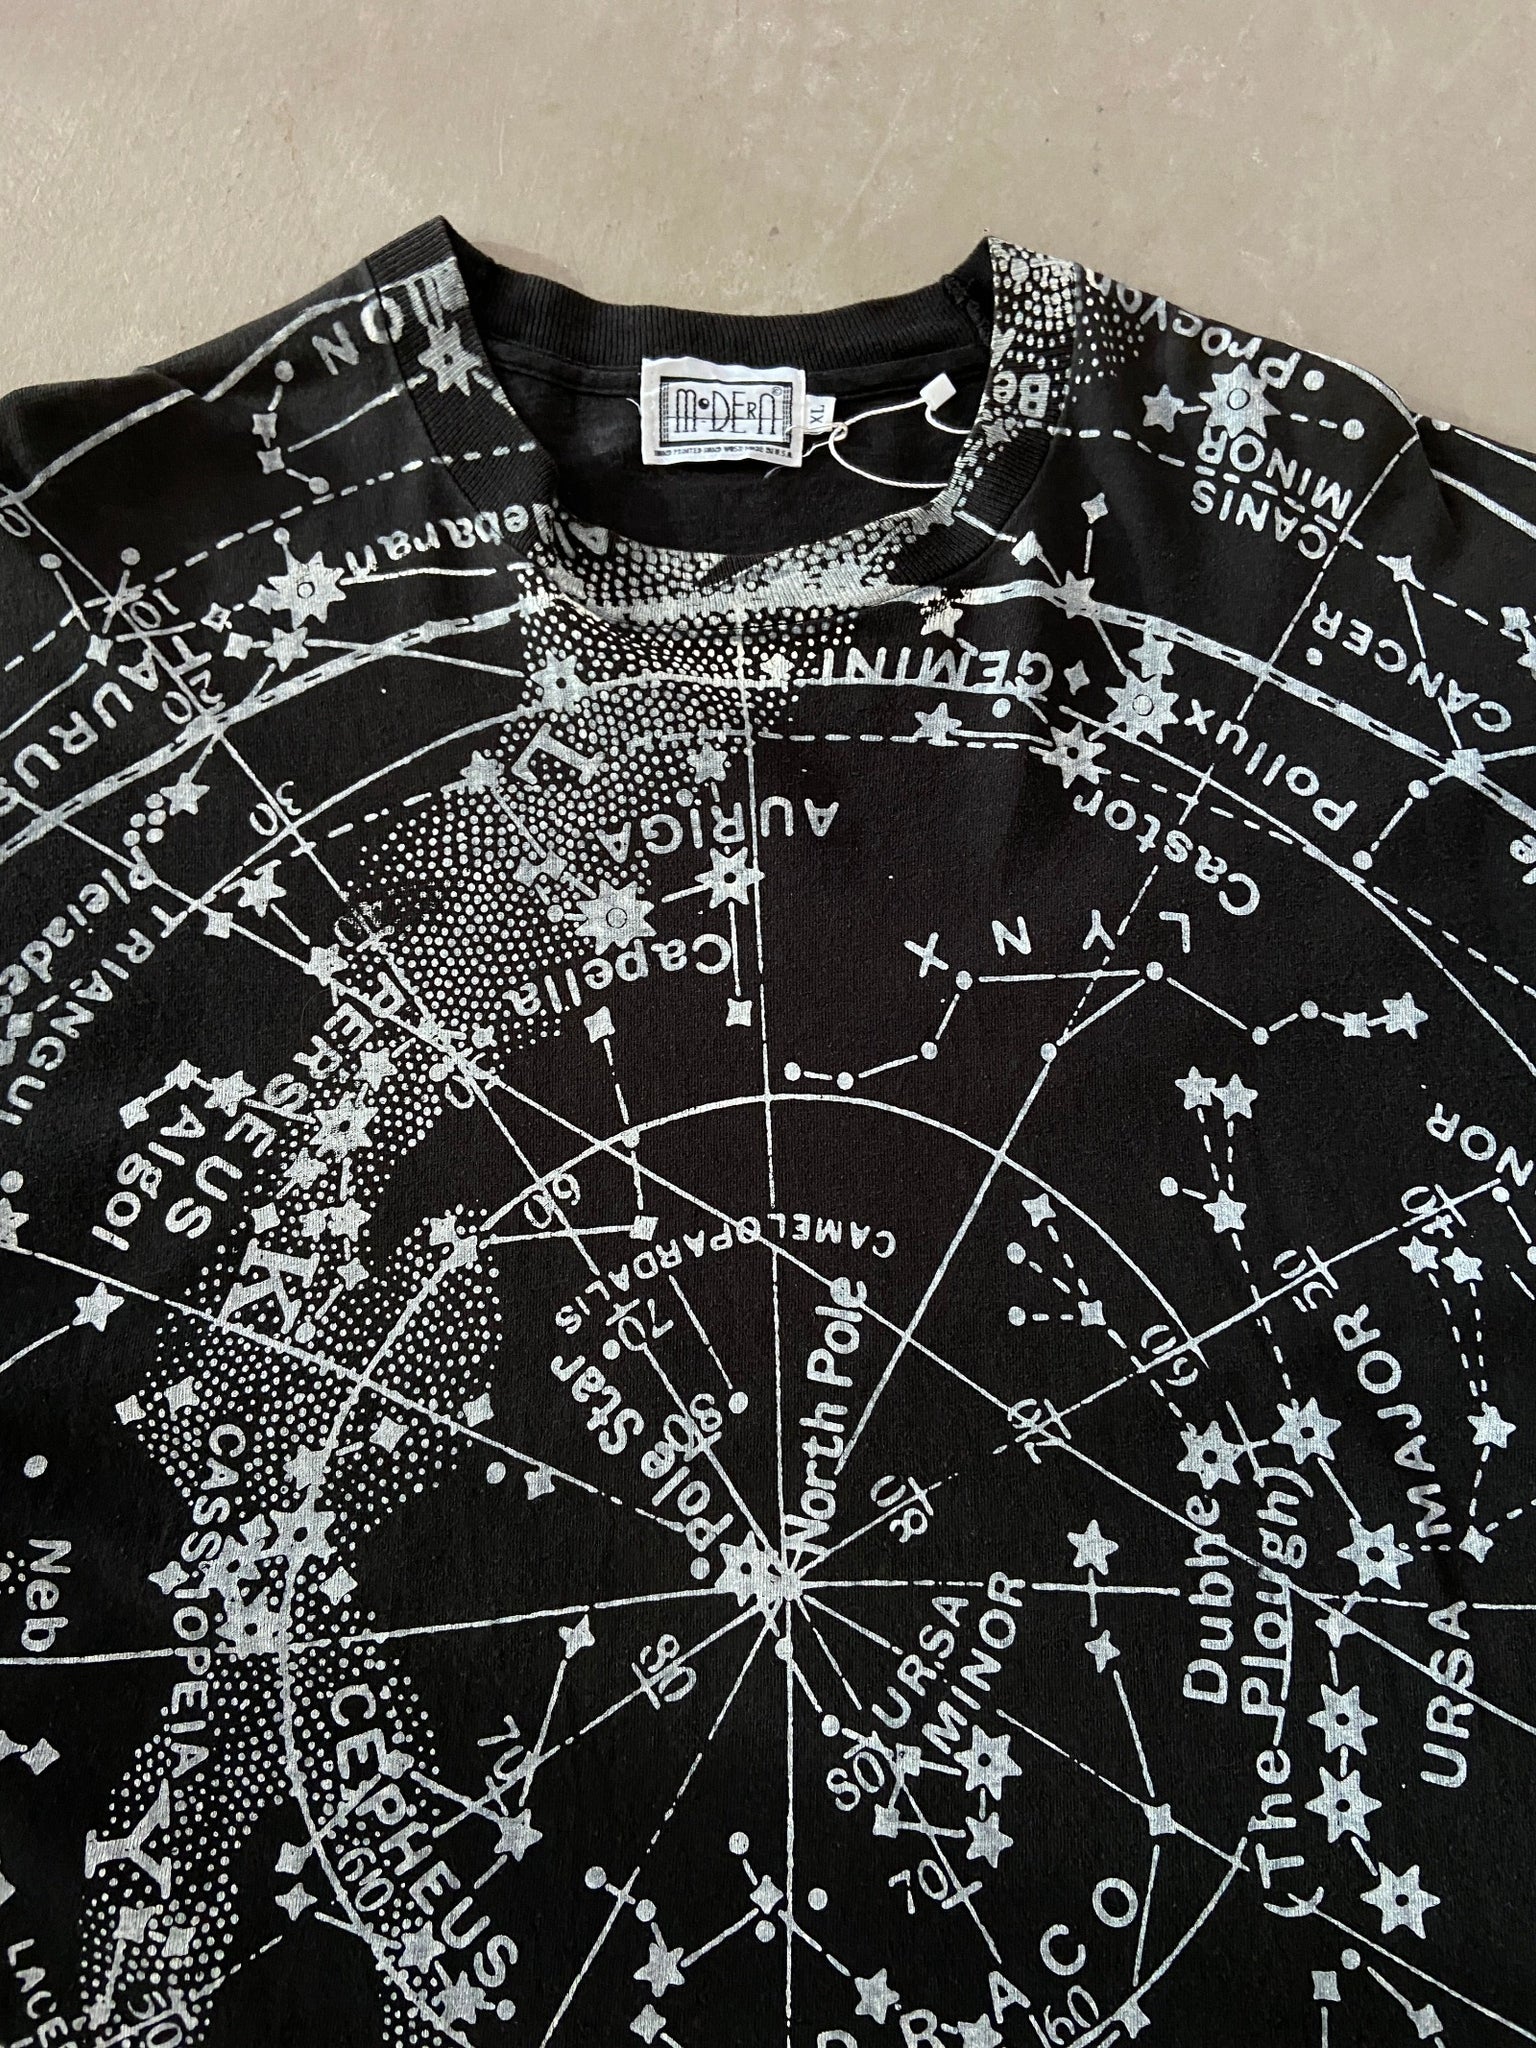 North Pole Constellation T-Shirt - XL